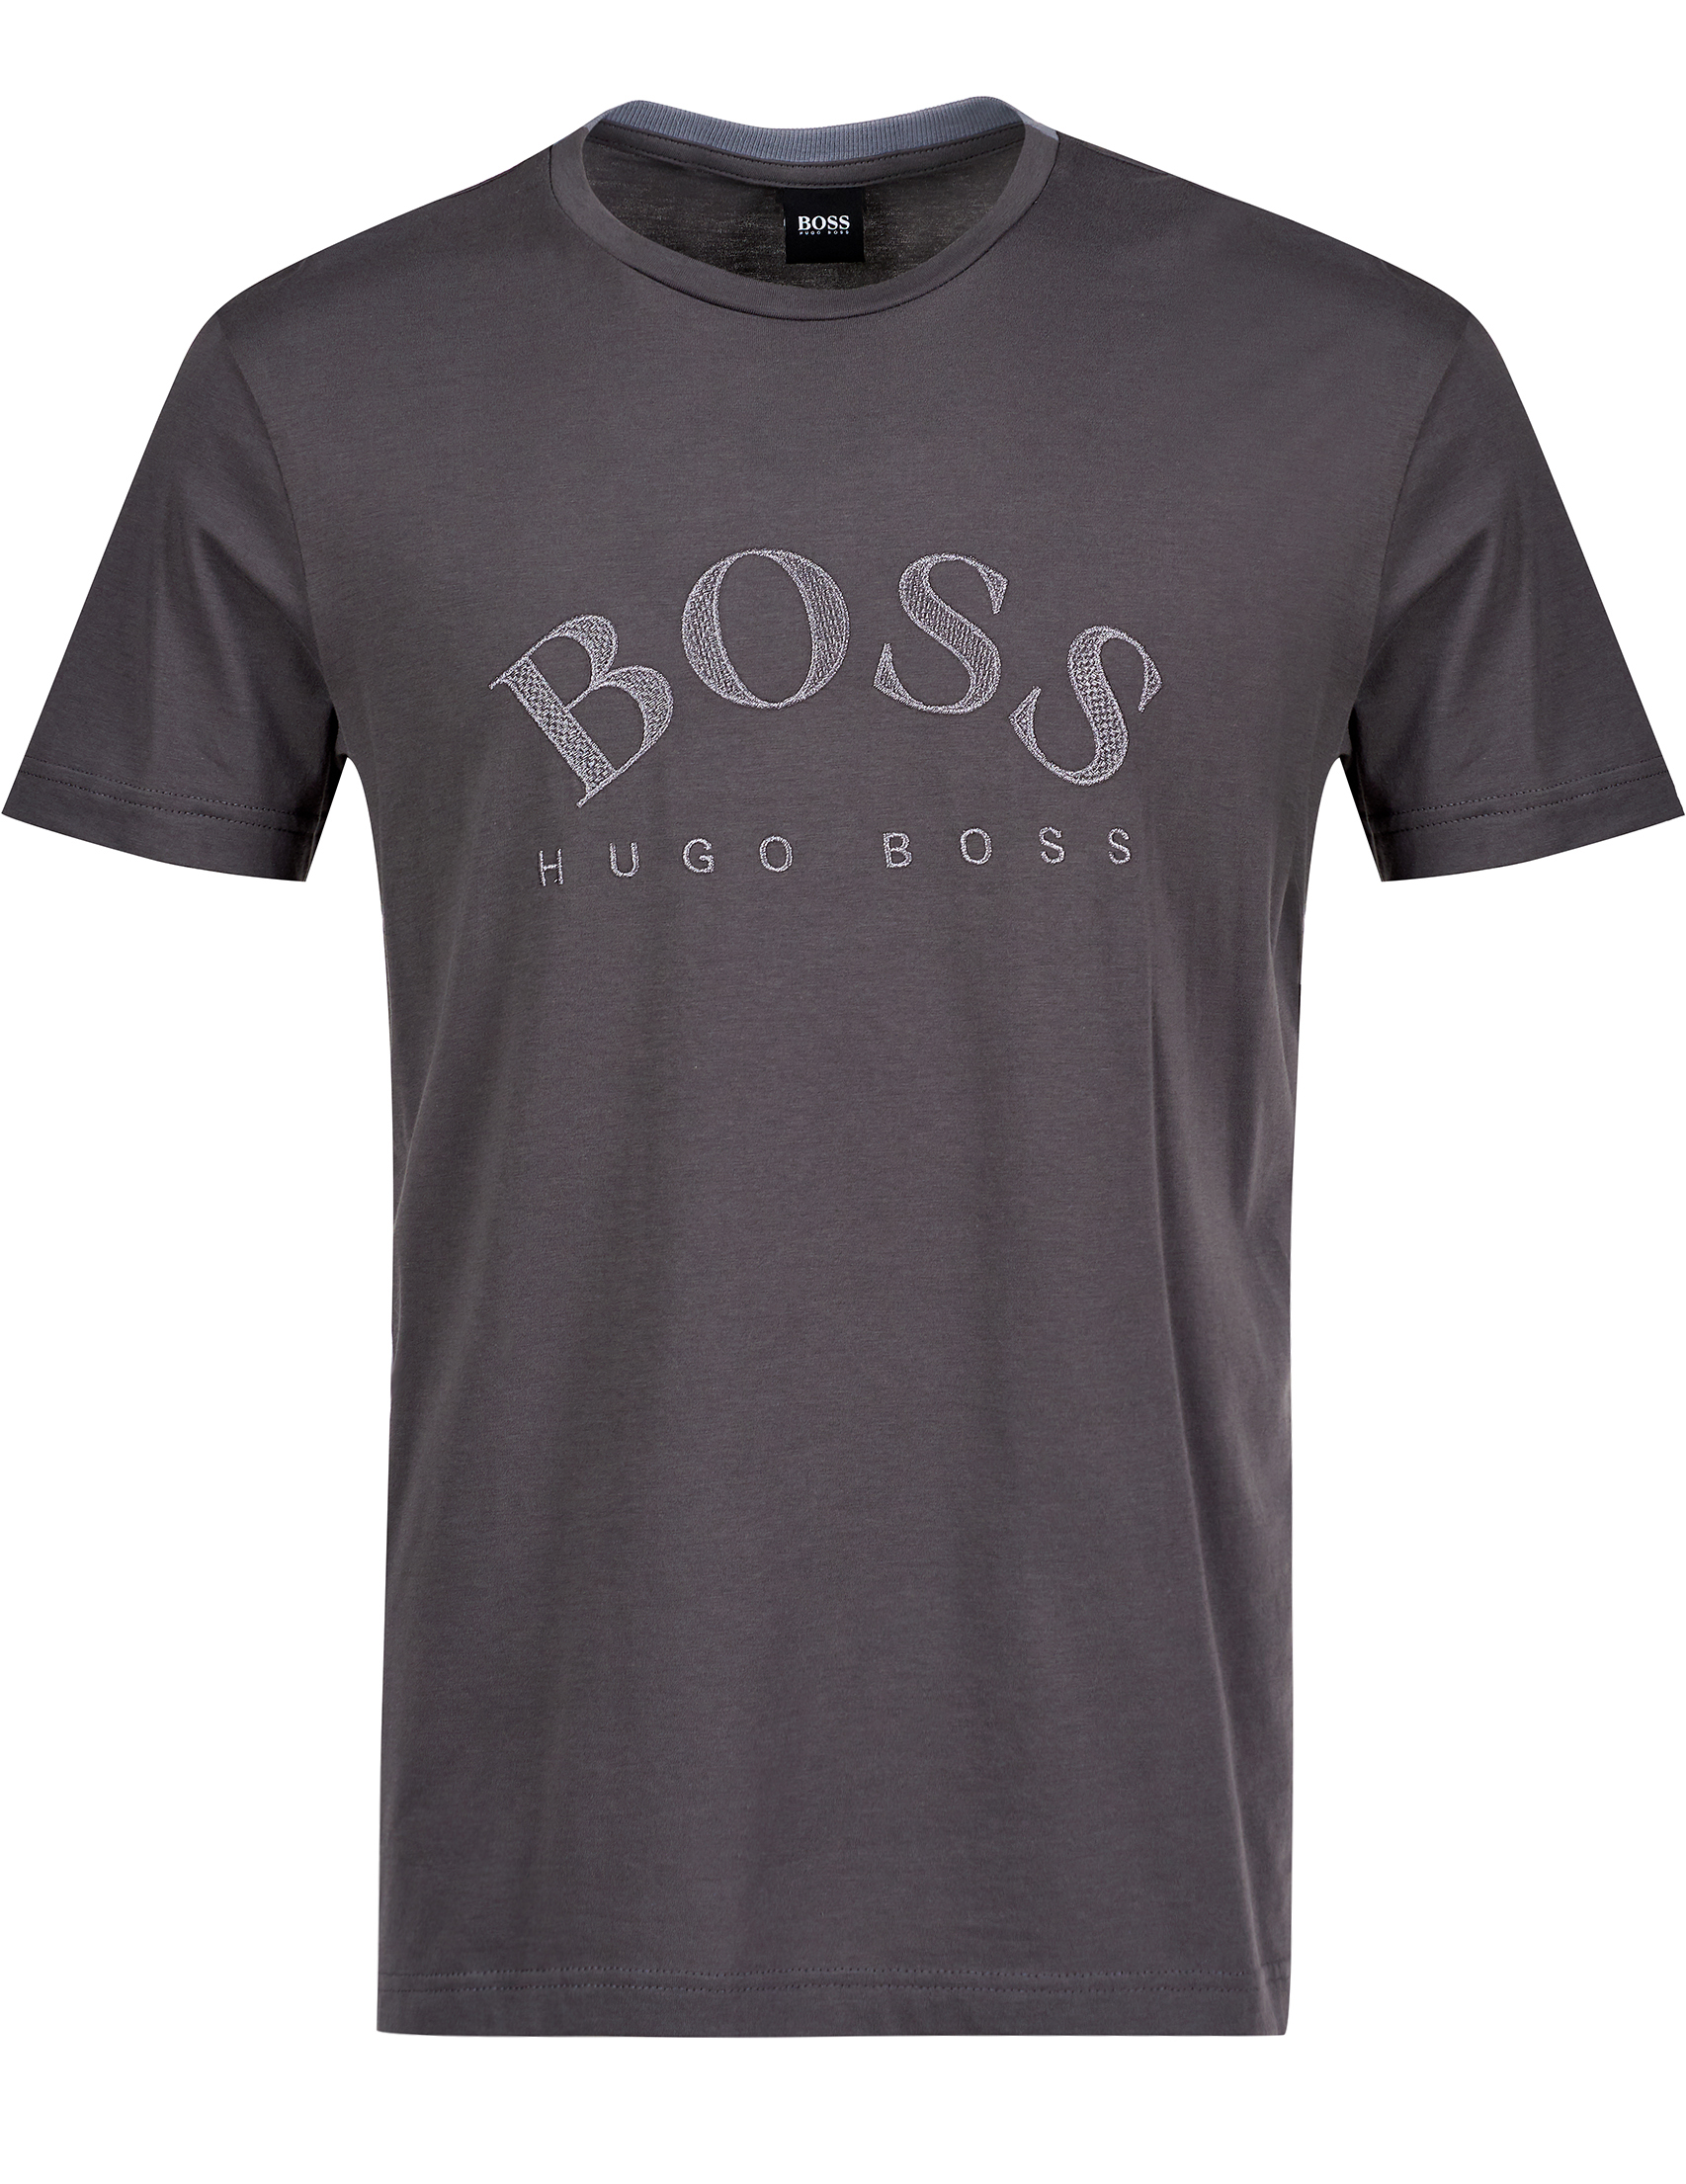 Футболки хуго босс. Футболка Хуго босс мужские. Футболка Boss Hugo Boss. Футболка Хьюго босс мужская. Hugo Boss майка.